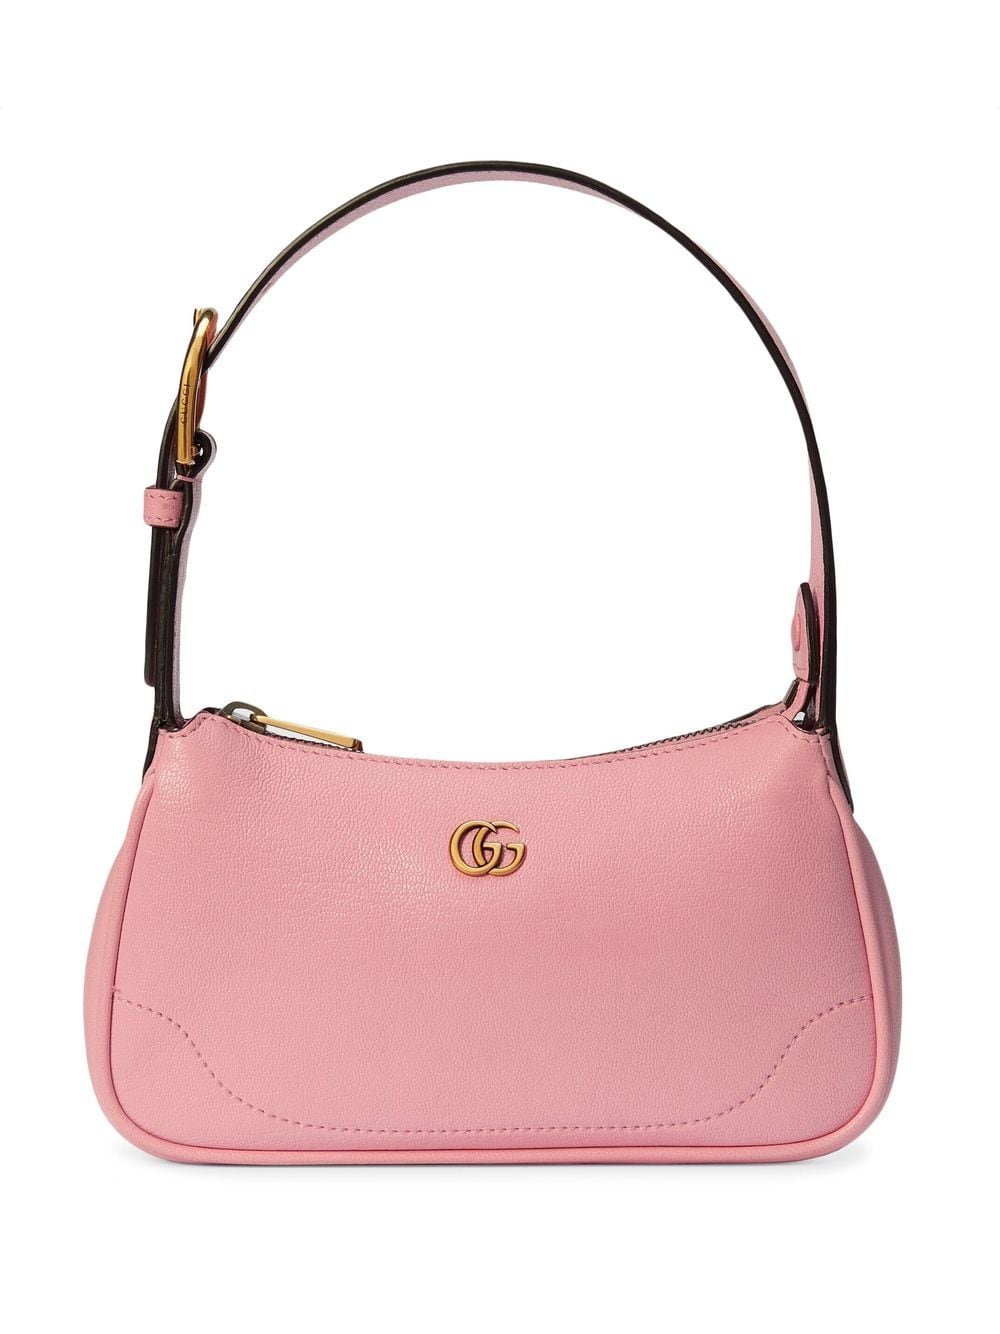 GUCCI Chic Blush Pink Leather Handbag - SS23